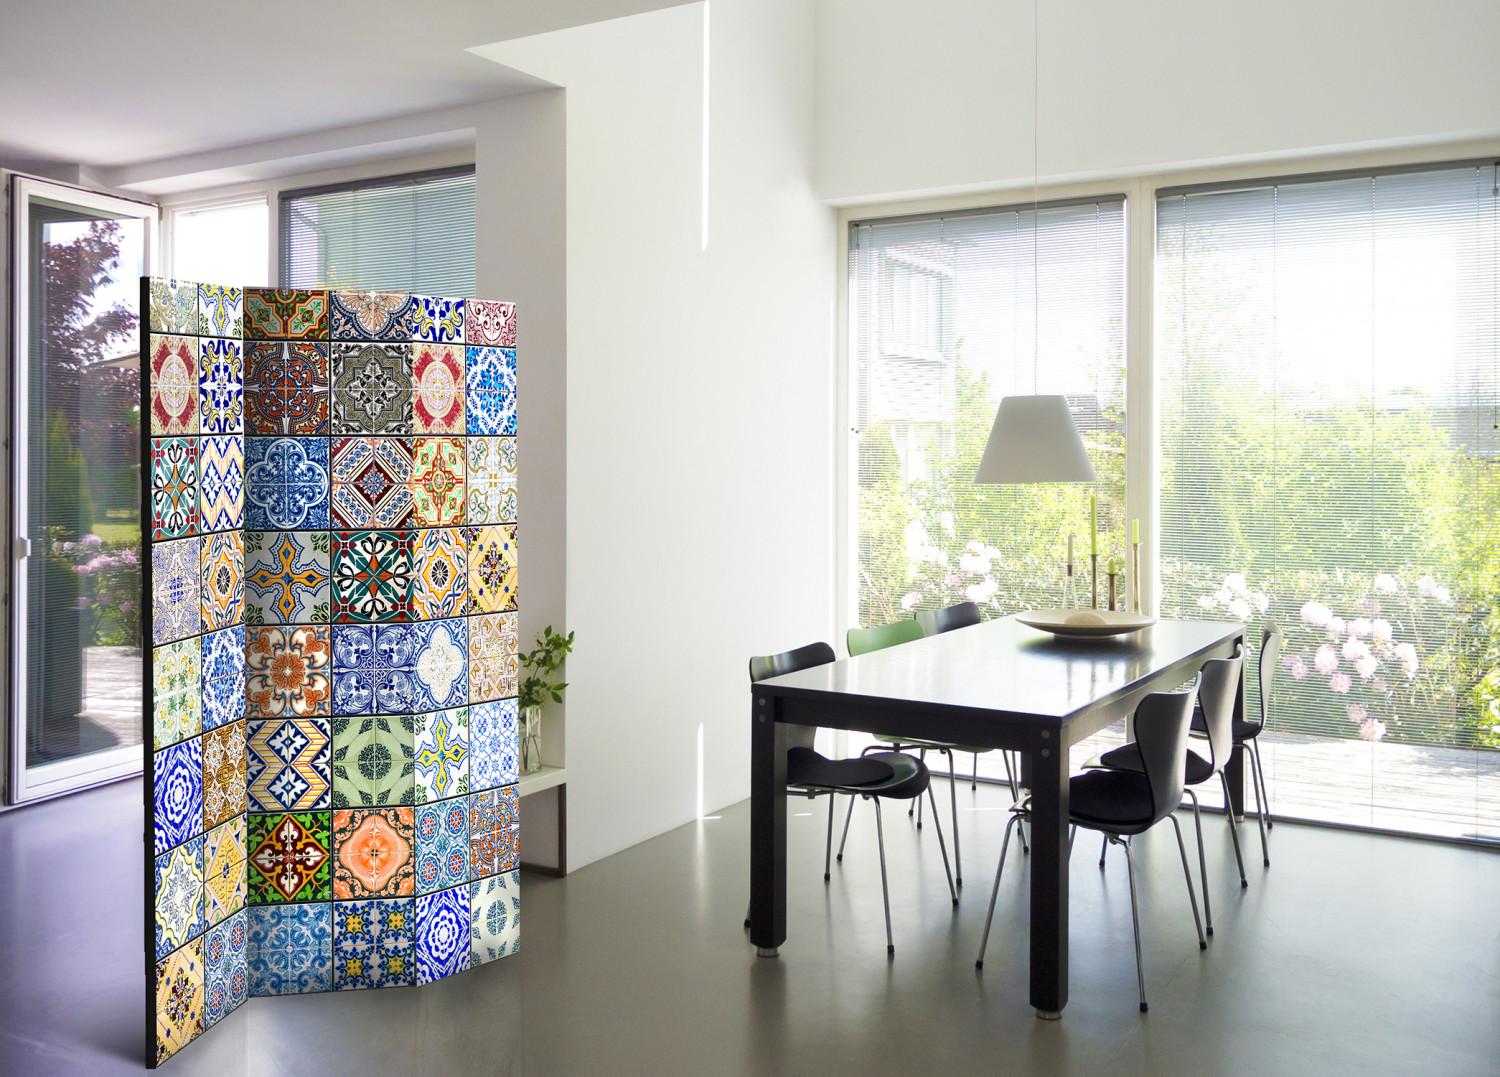 Biombo decorativo Mosaico colorido - textura en tema de patrones coloridos